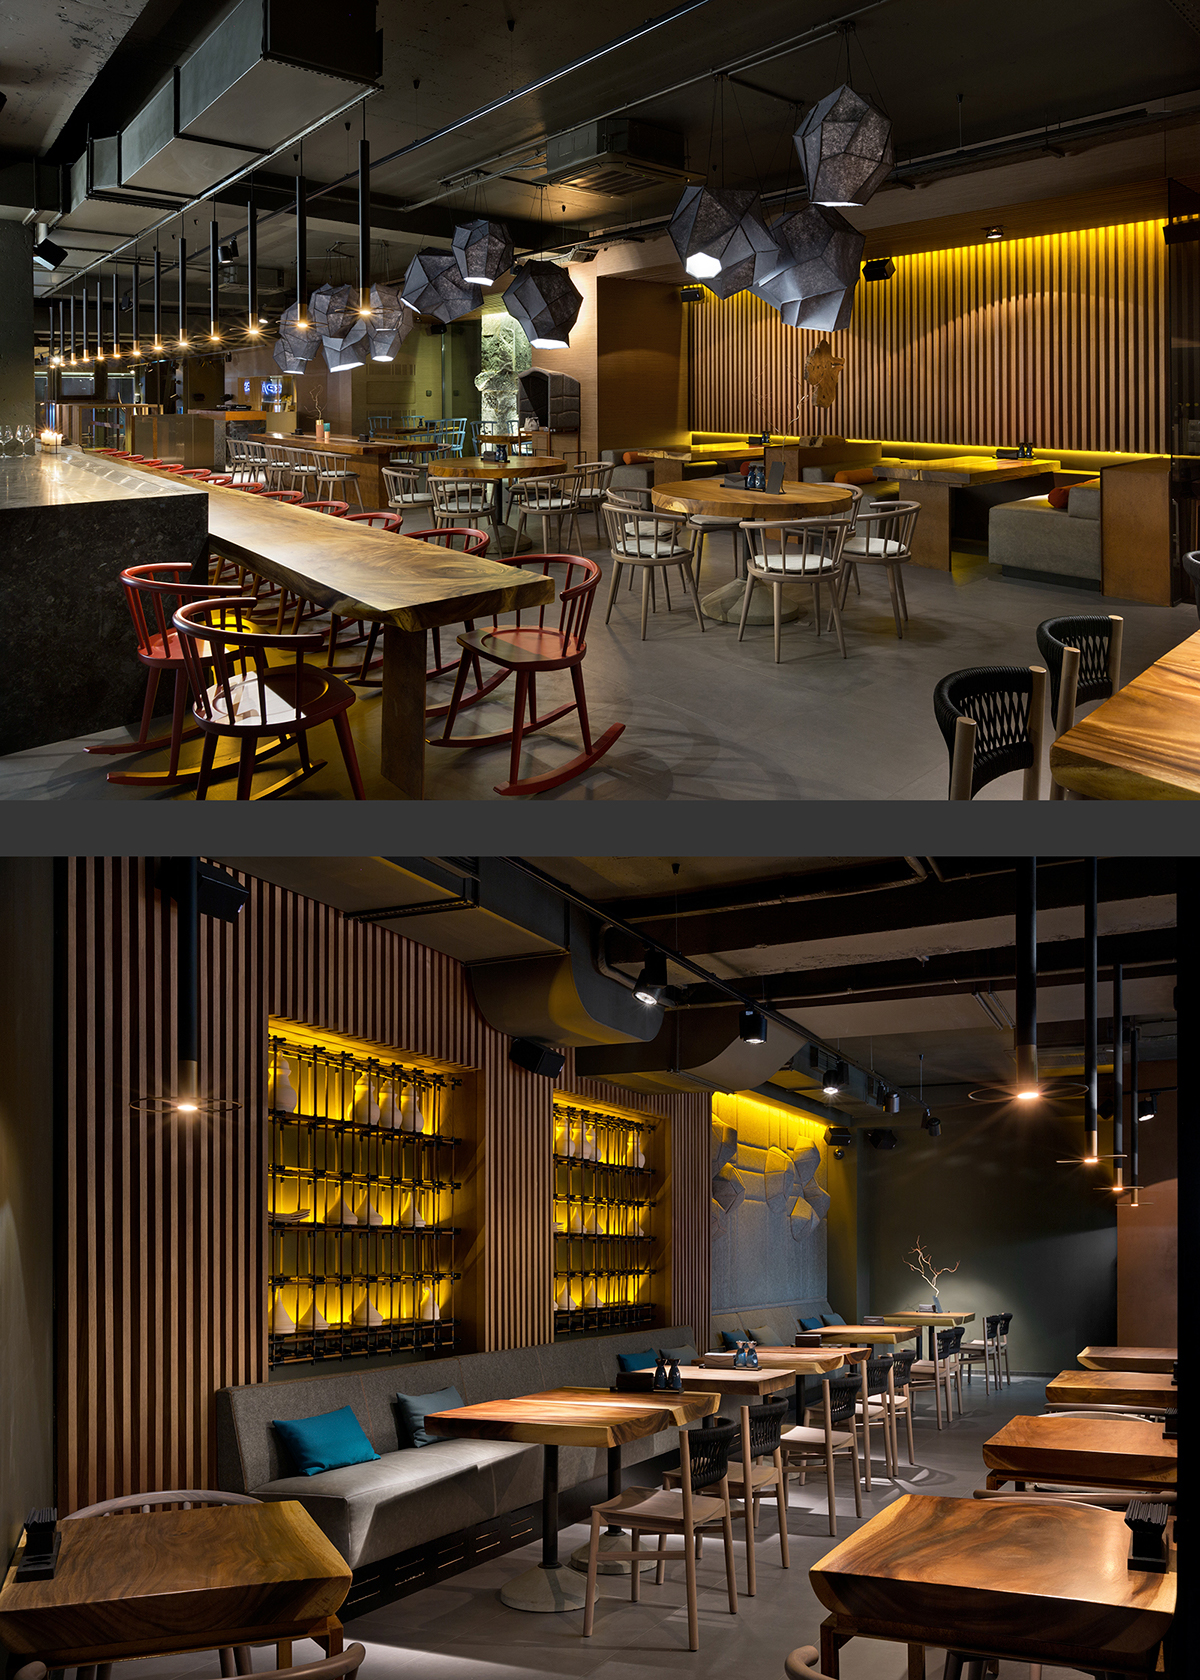 yod design studio yod restaurant design Interior ukraine дизайн Киев паназиатский ресторан интерьер Pan-Asian